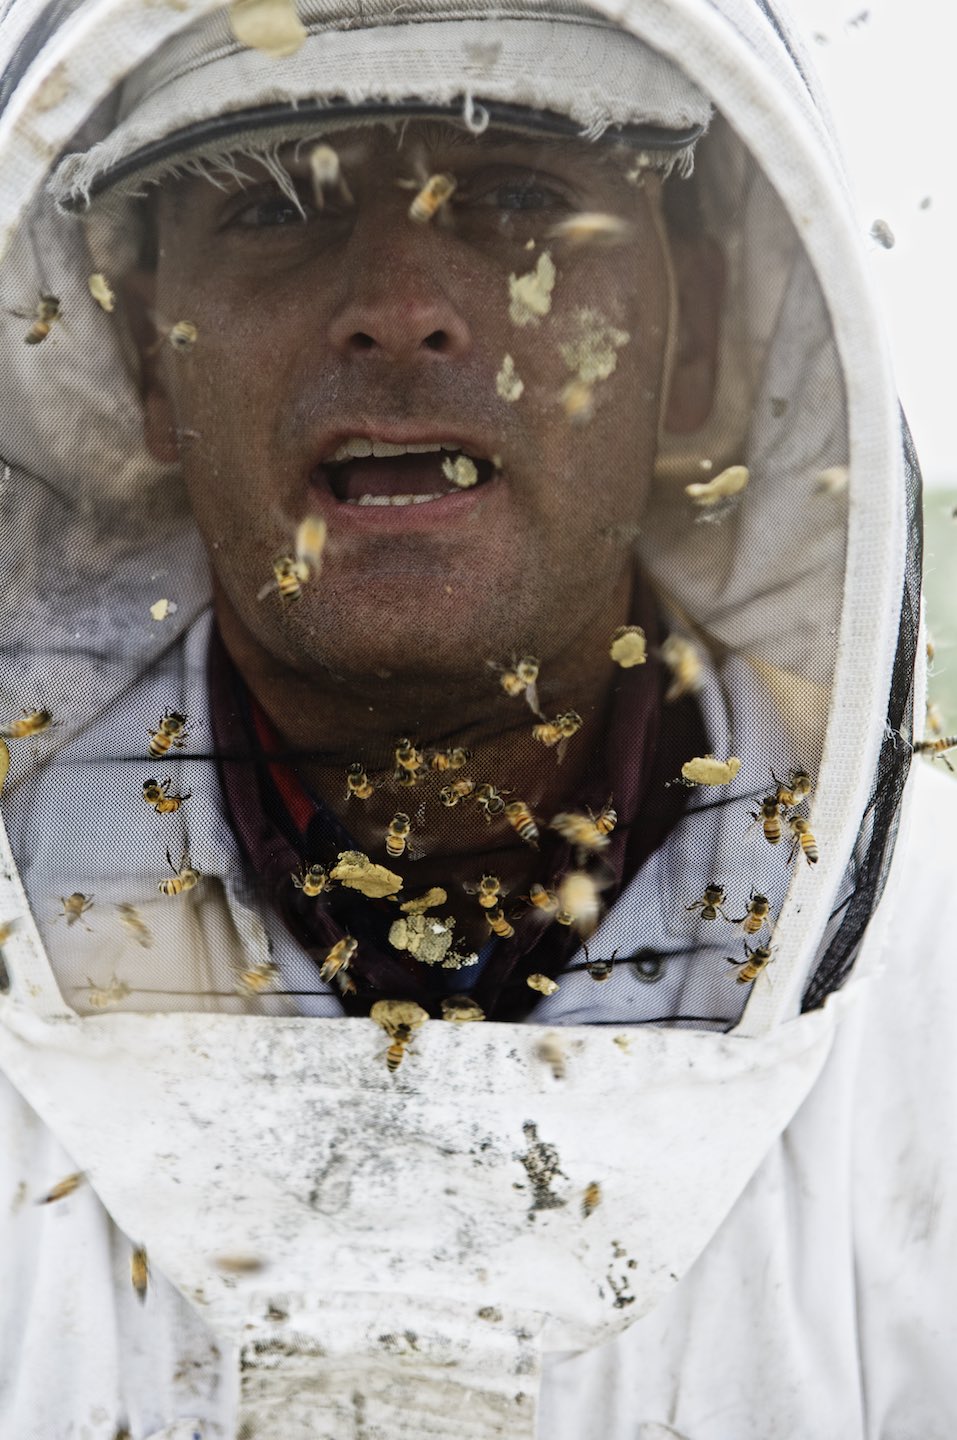 Honeybees swarming around beekeeper